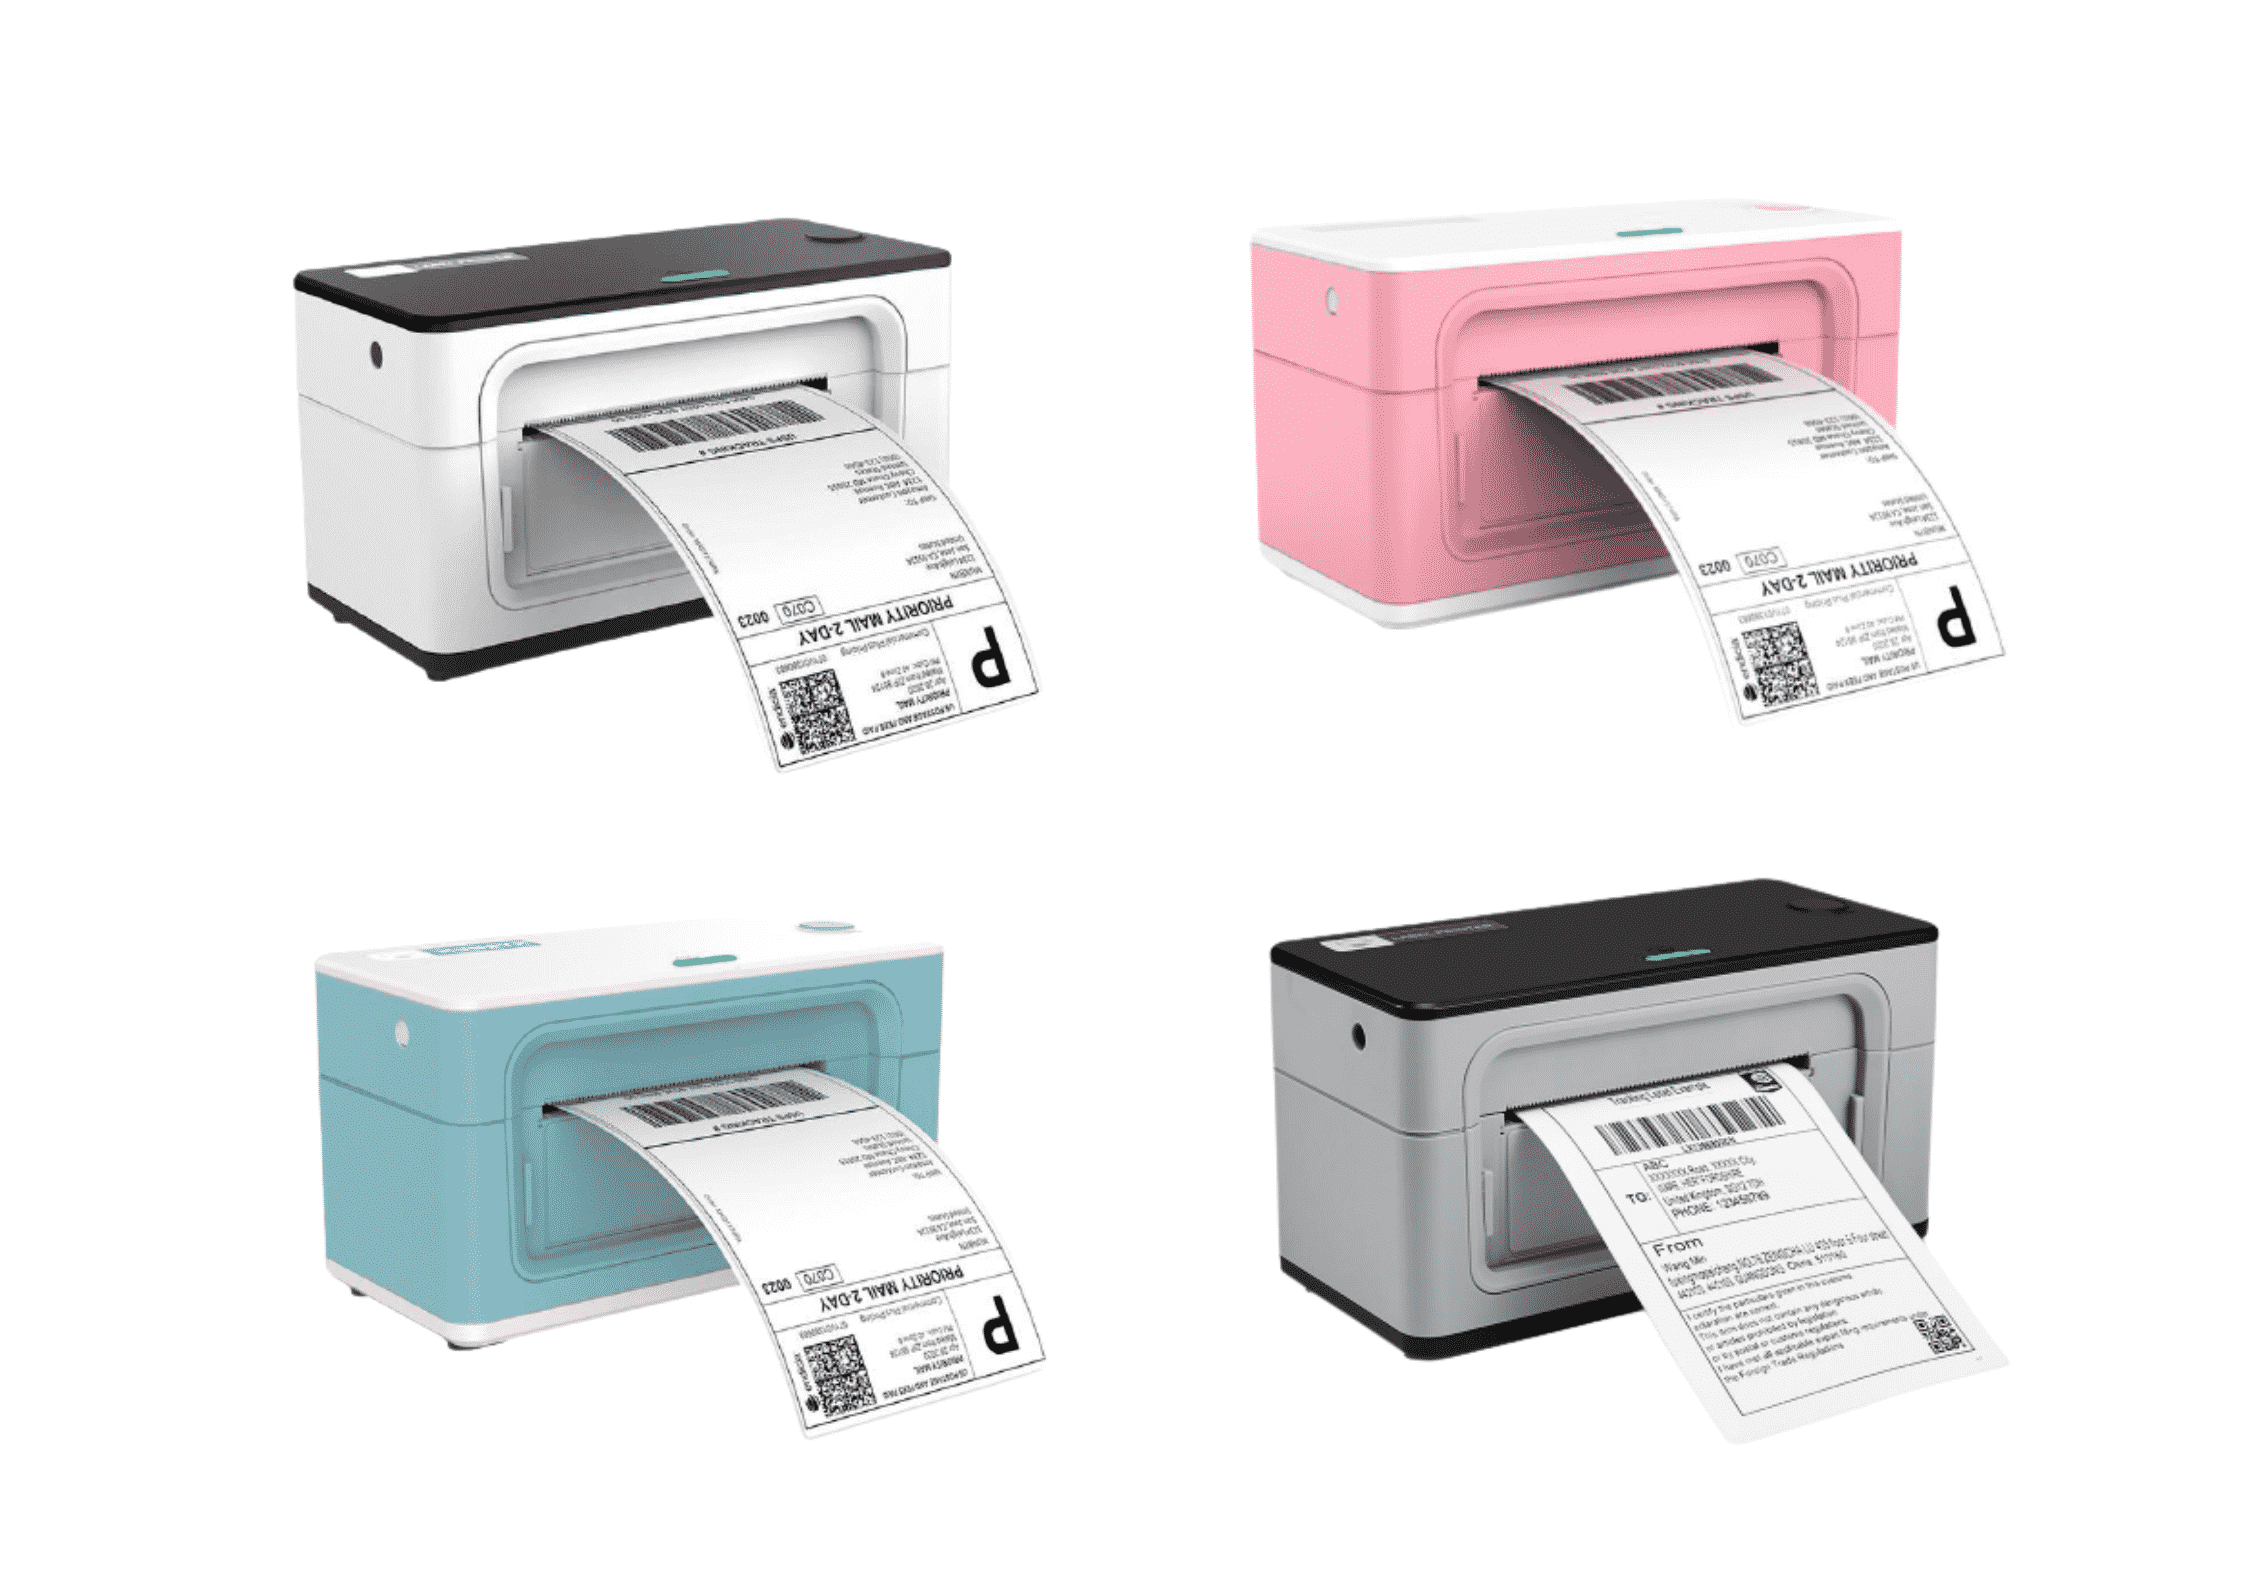 MUNBYN thermal printer color variant